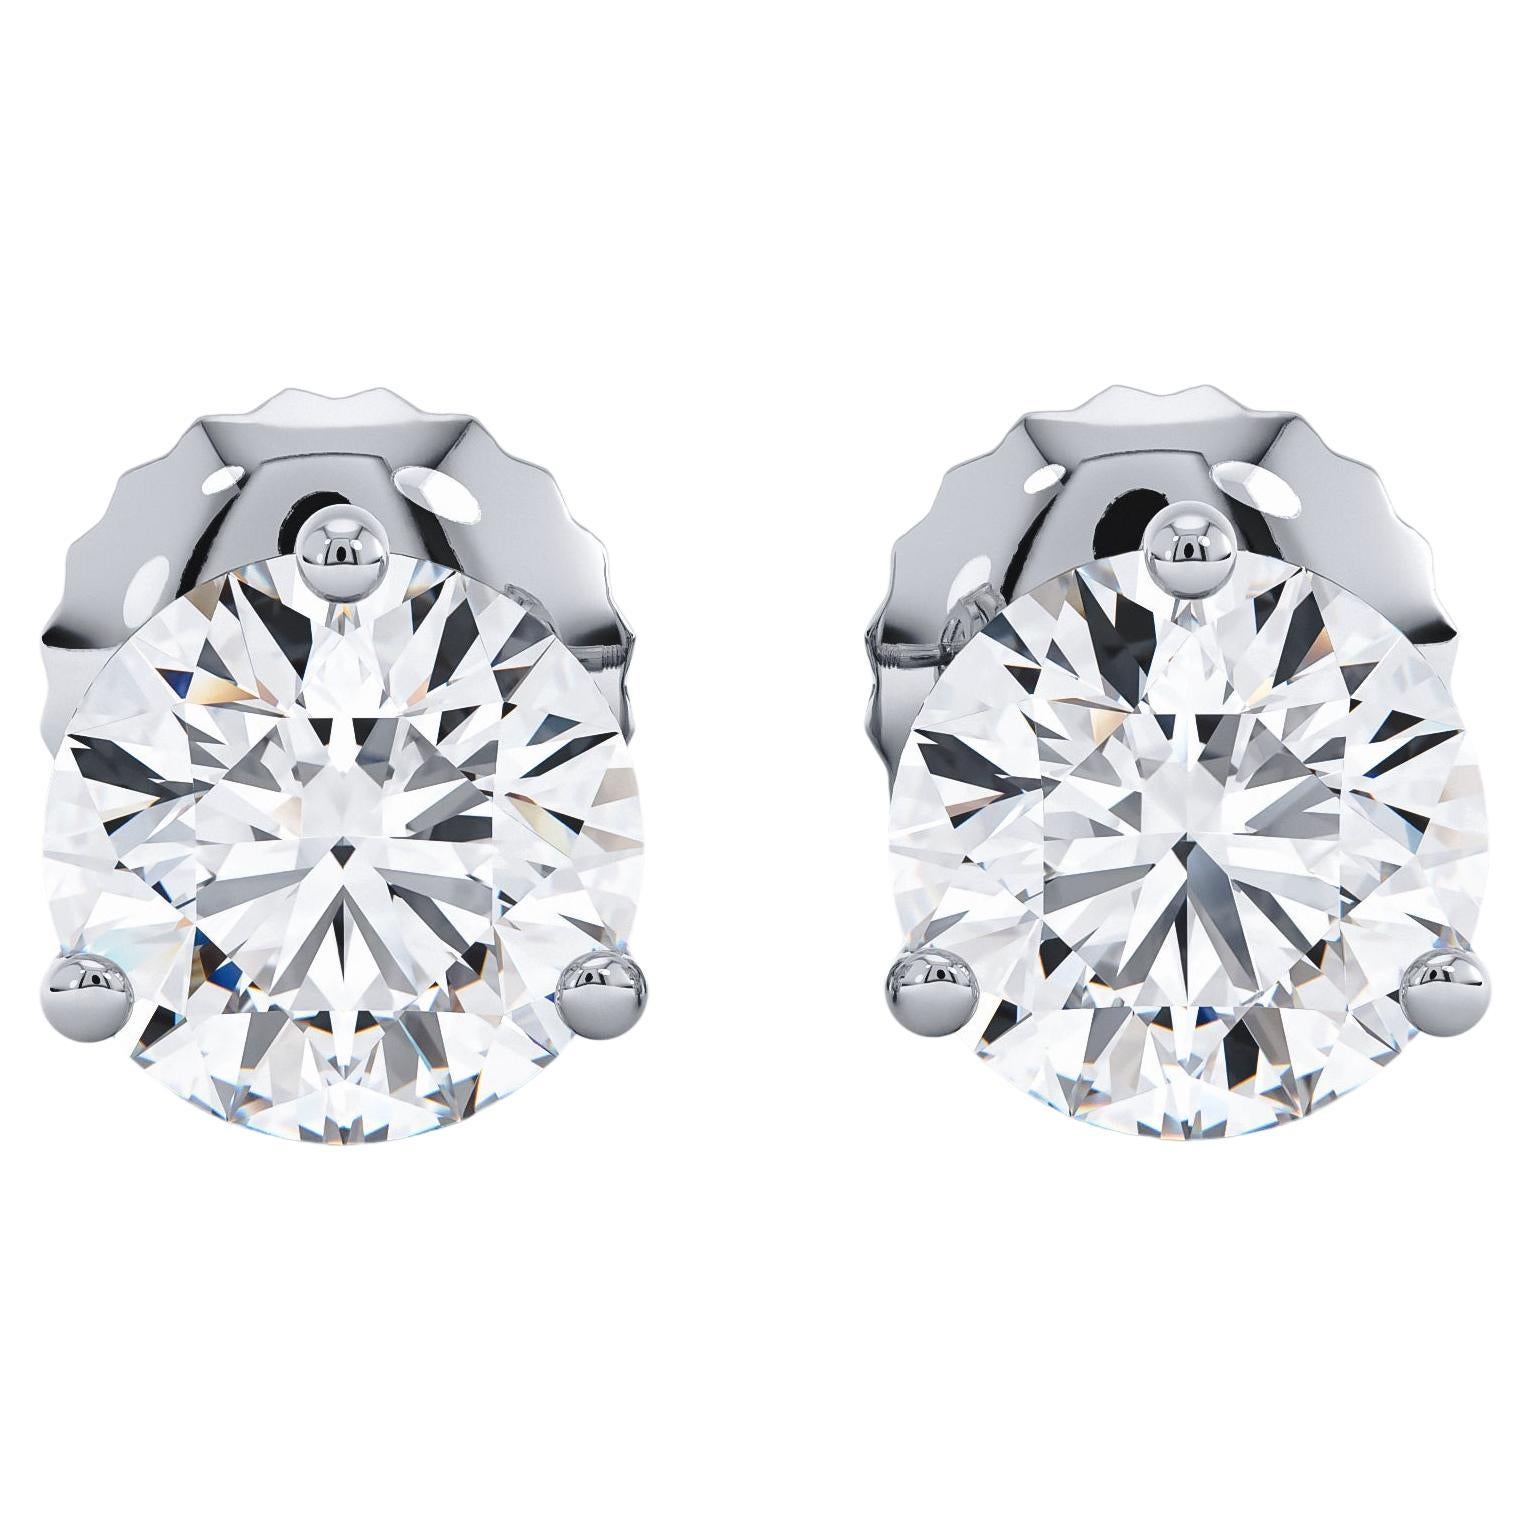 3 Carat Total Diamond Weight Natural Diamond Stud Earrings with Screwbacks